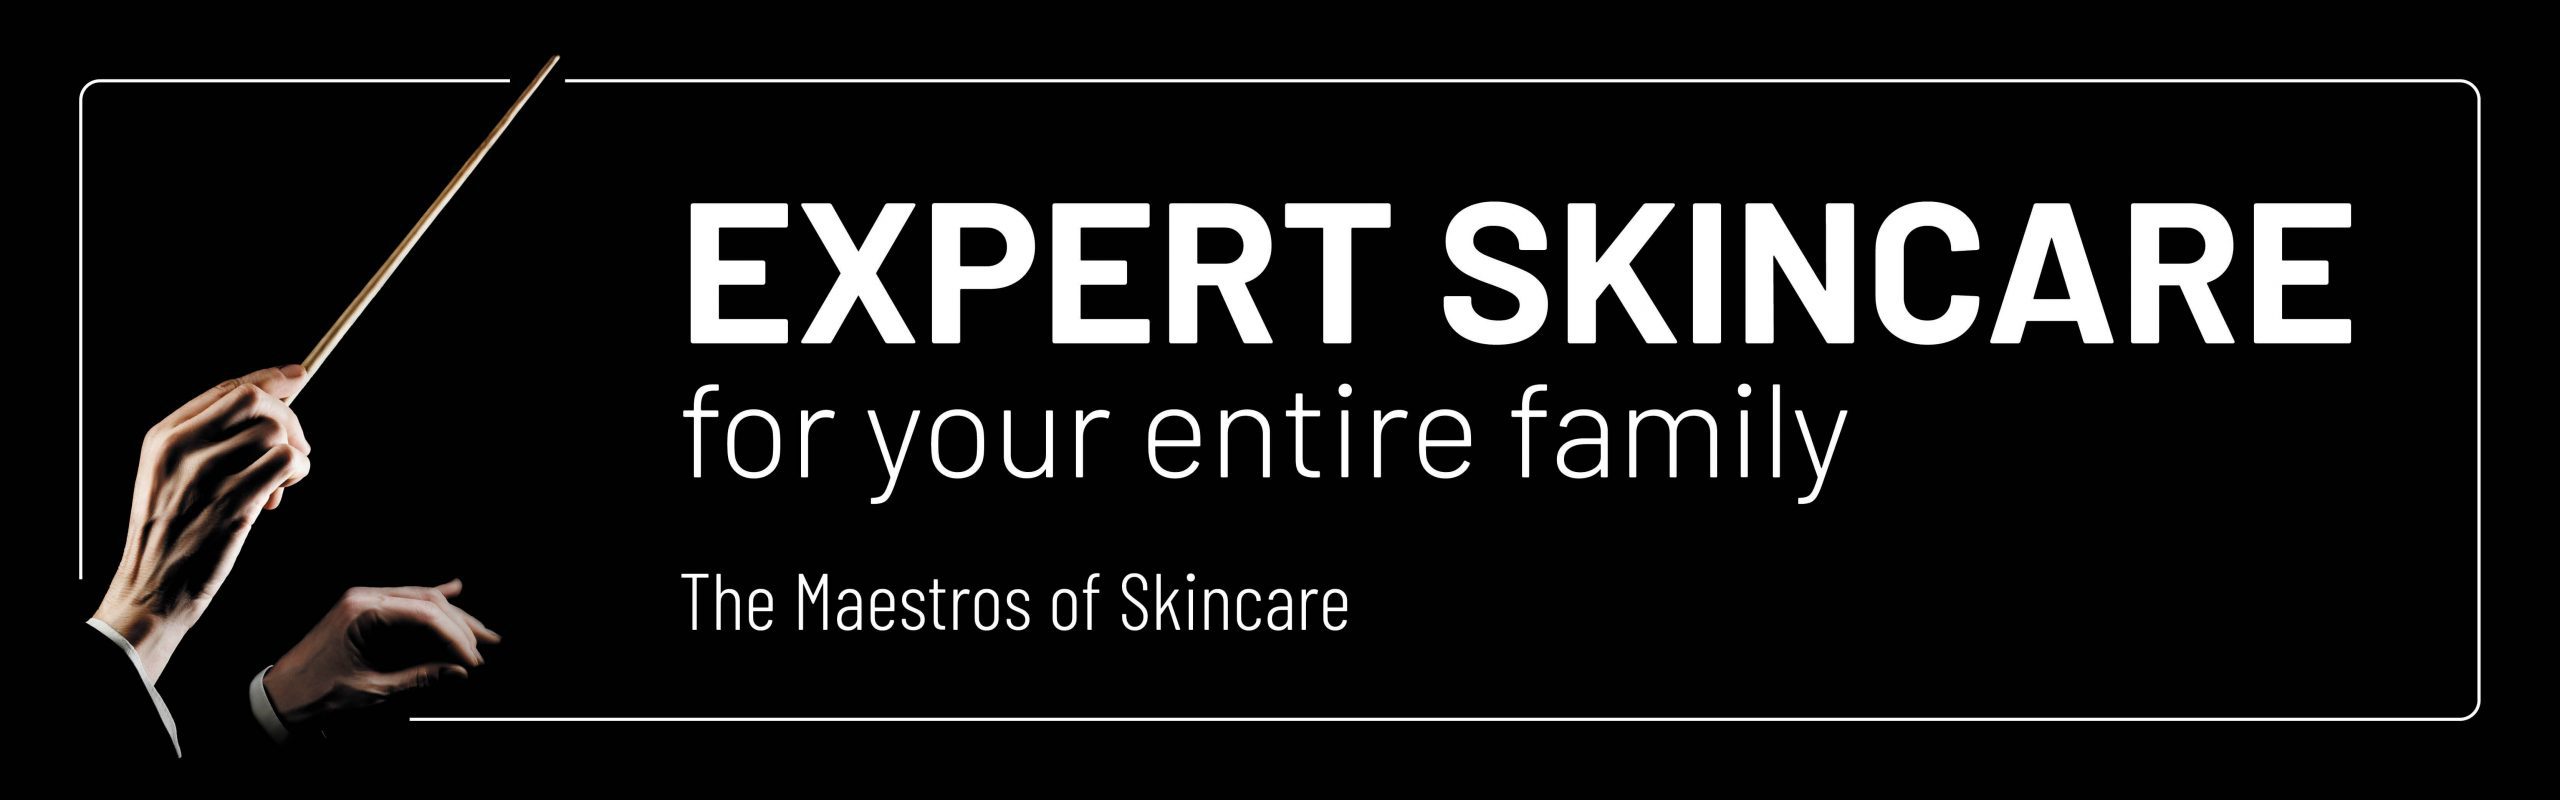 Expert skincare